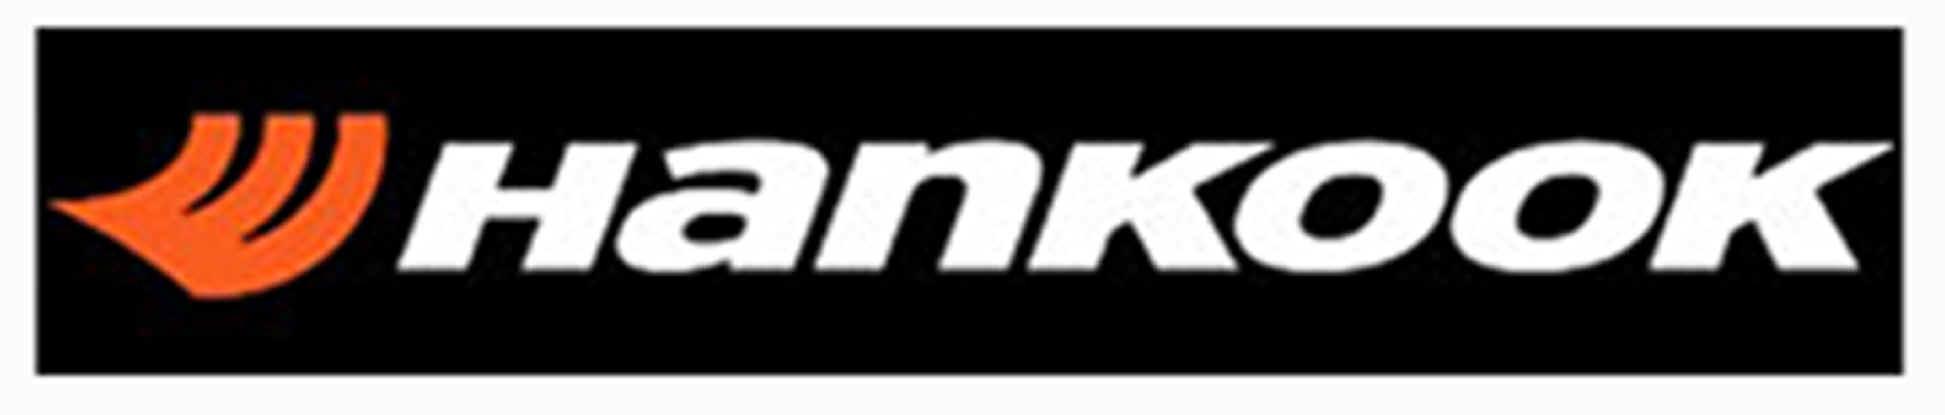 Hankook Logo - Hankook Logos